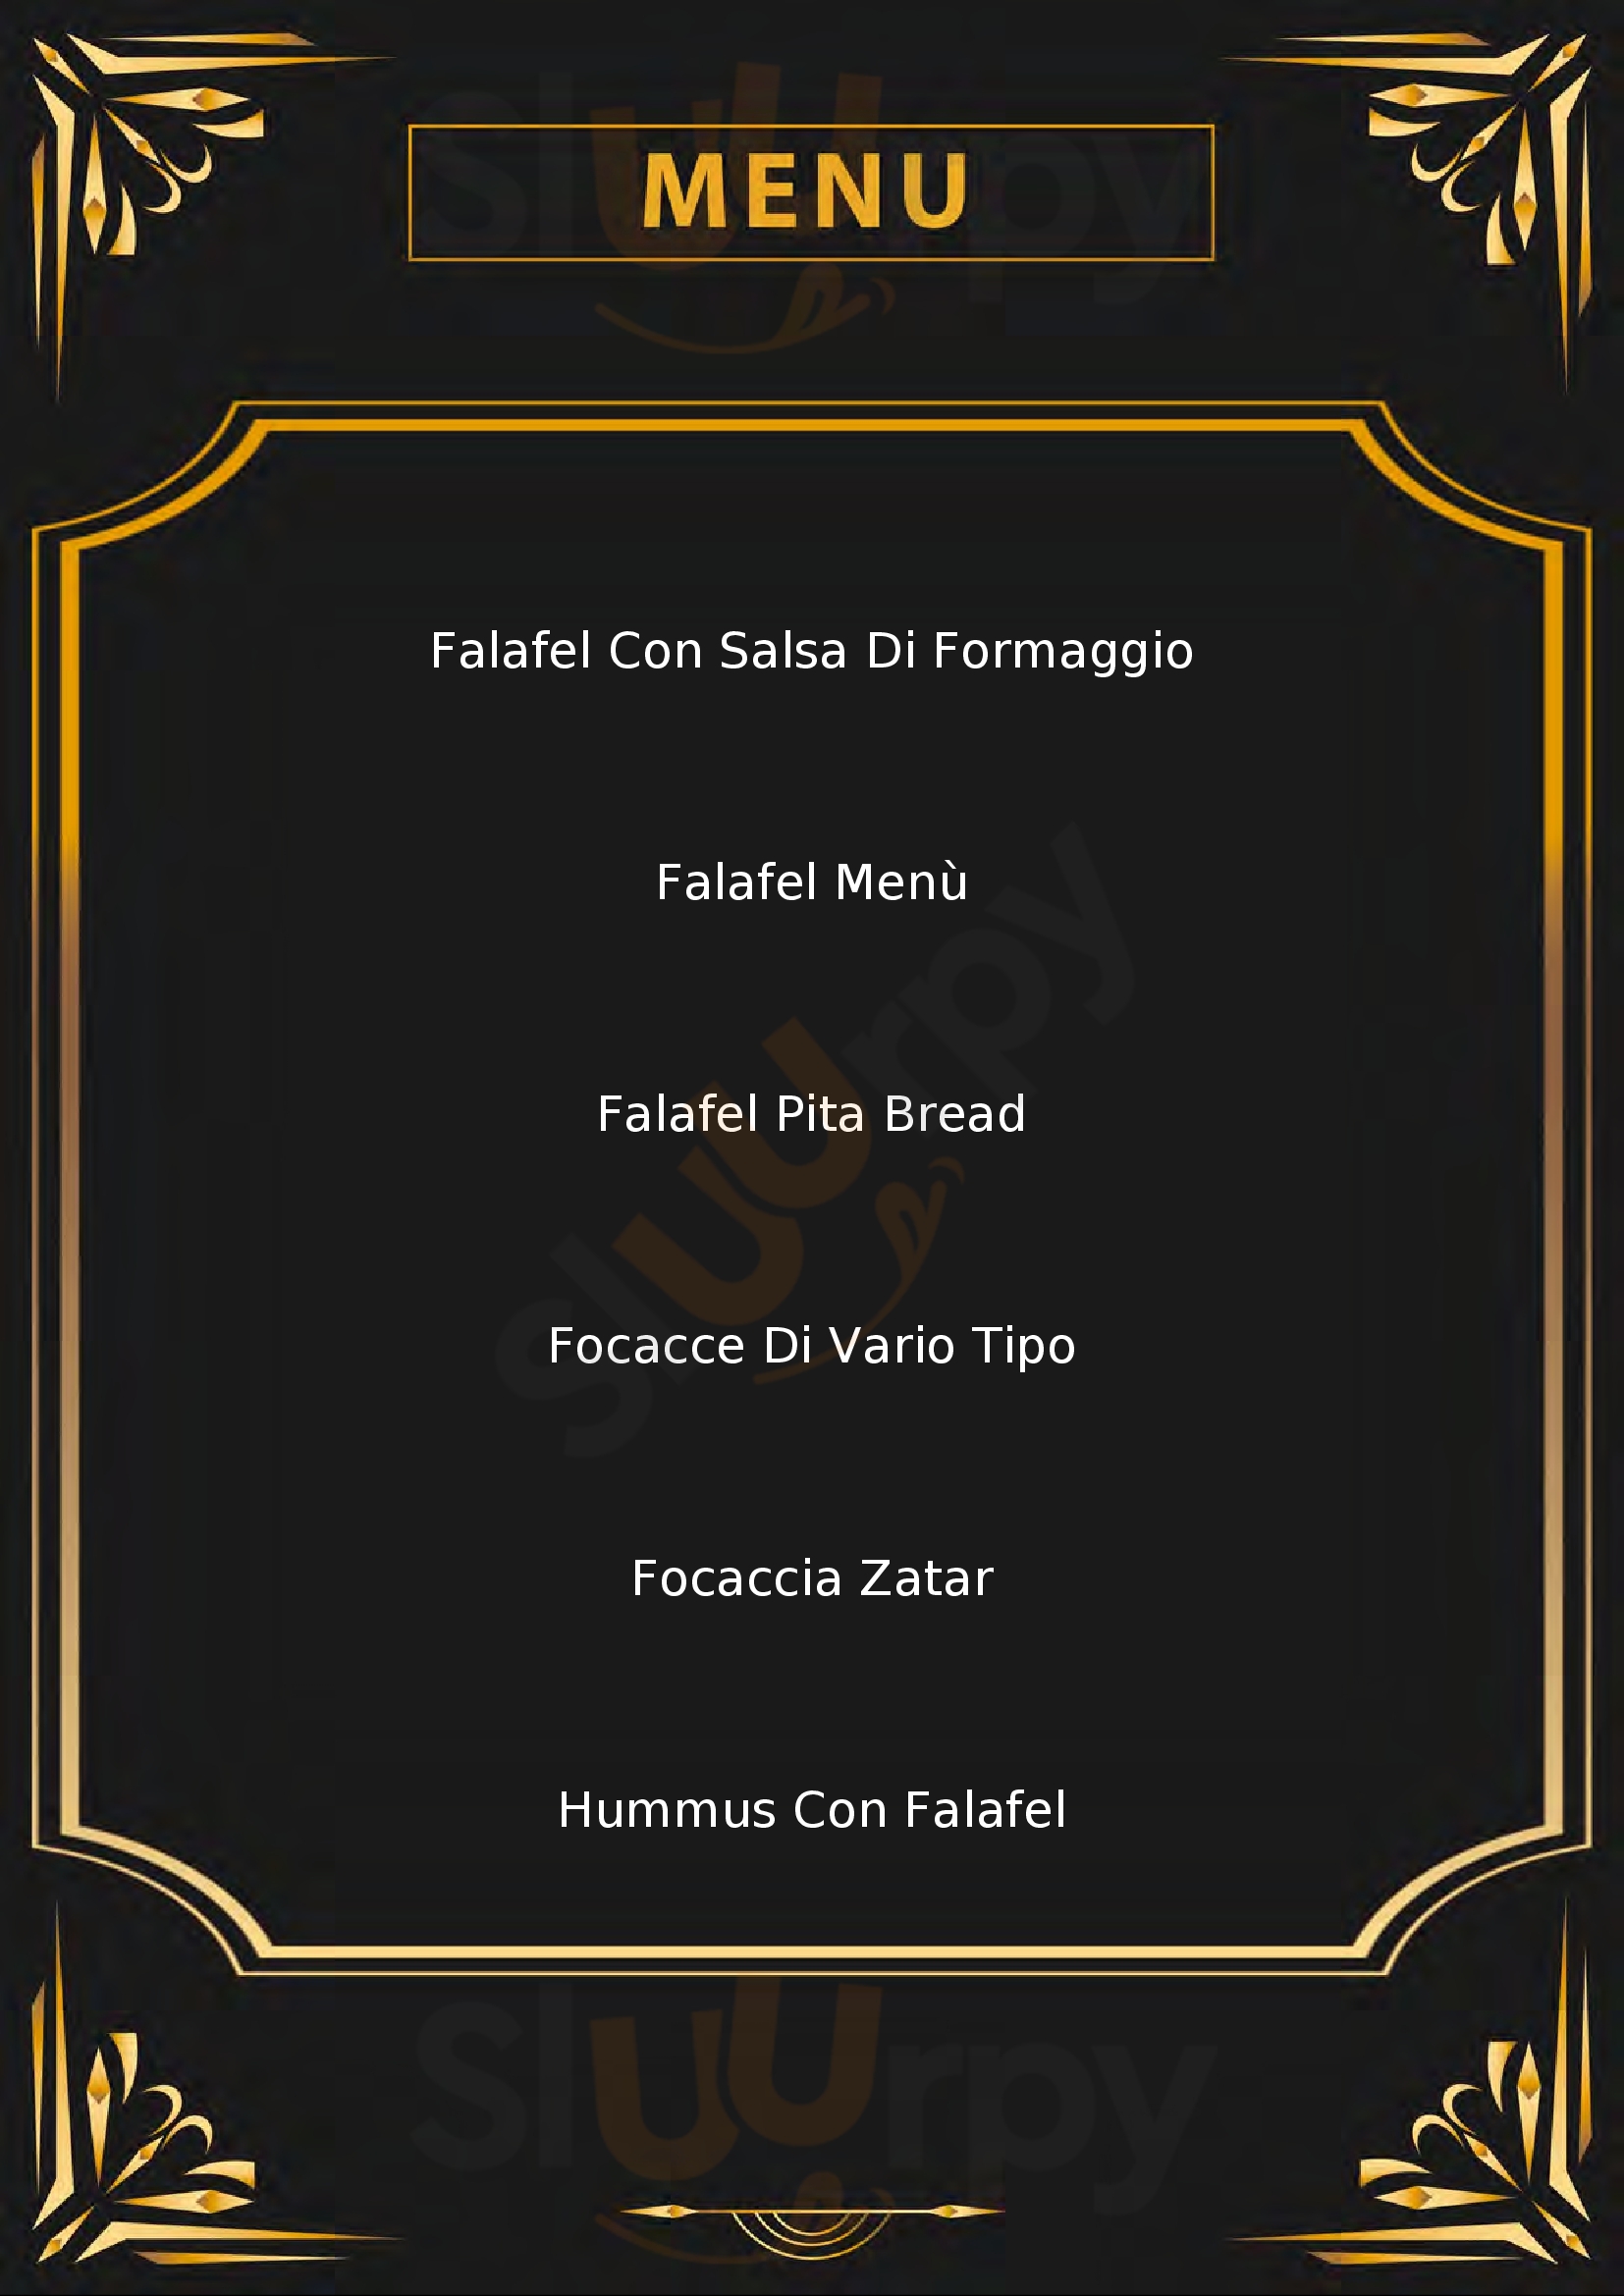 Atomic Falafel Firenze menù 1 pagina